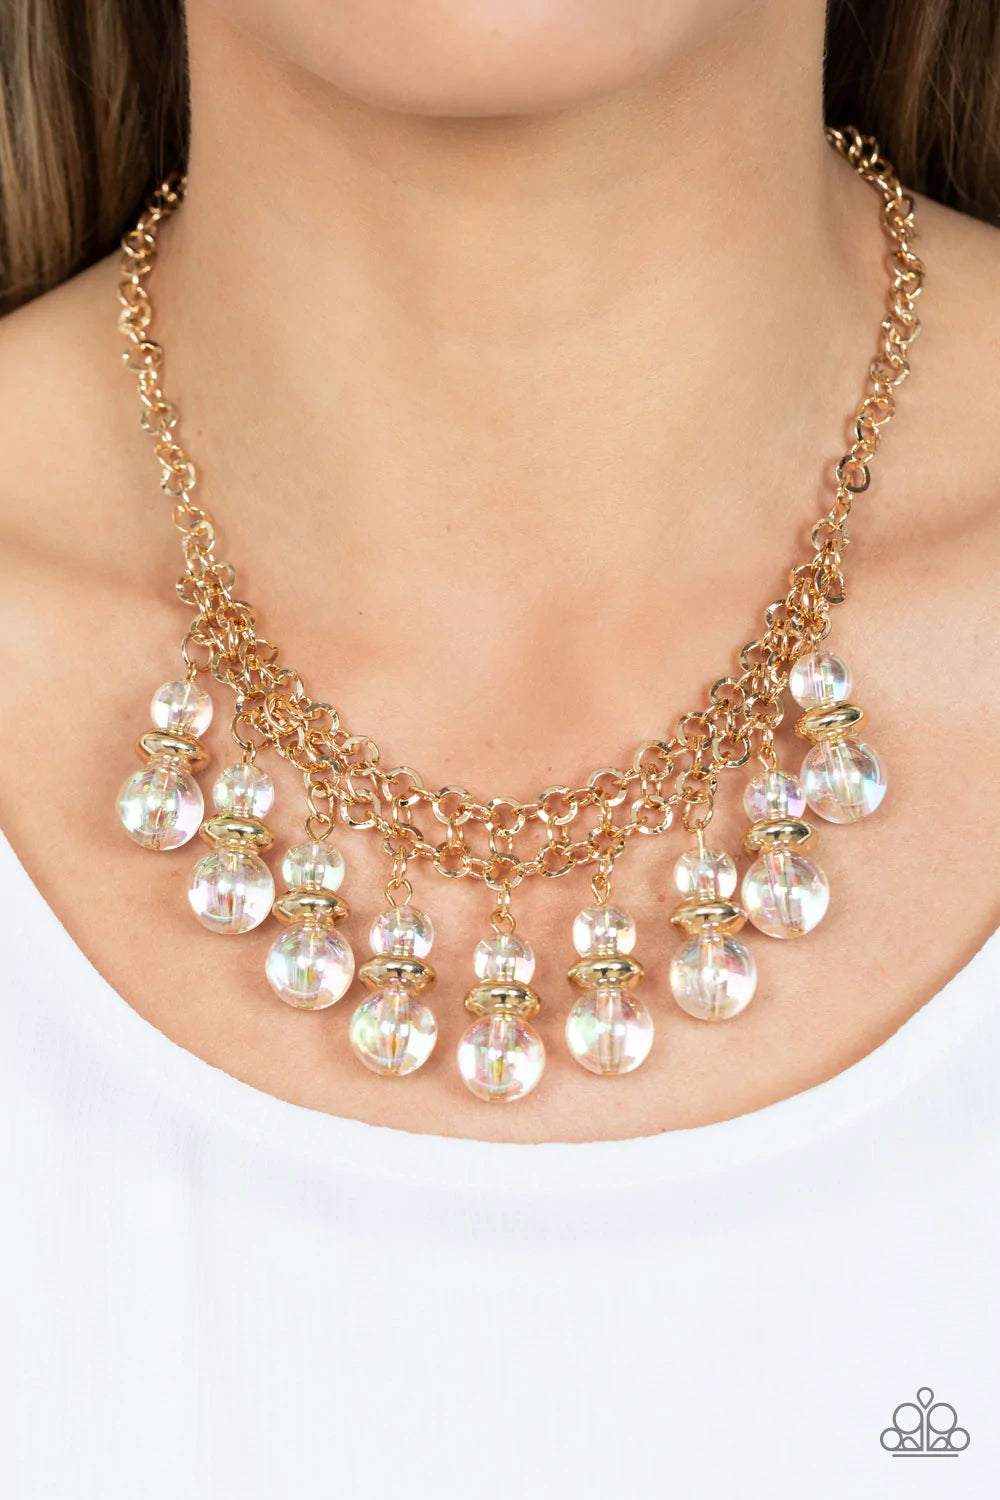 100% Love Pearl Necklace – Blur Blur Space